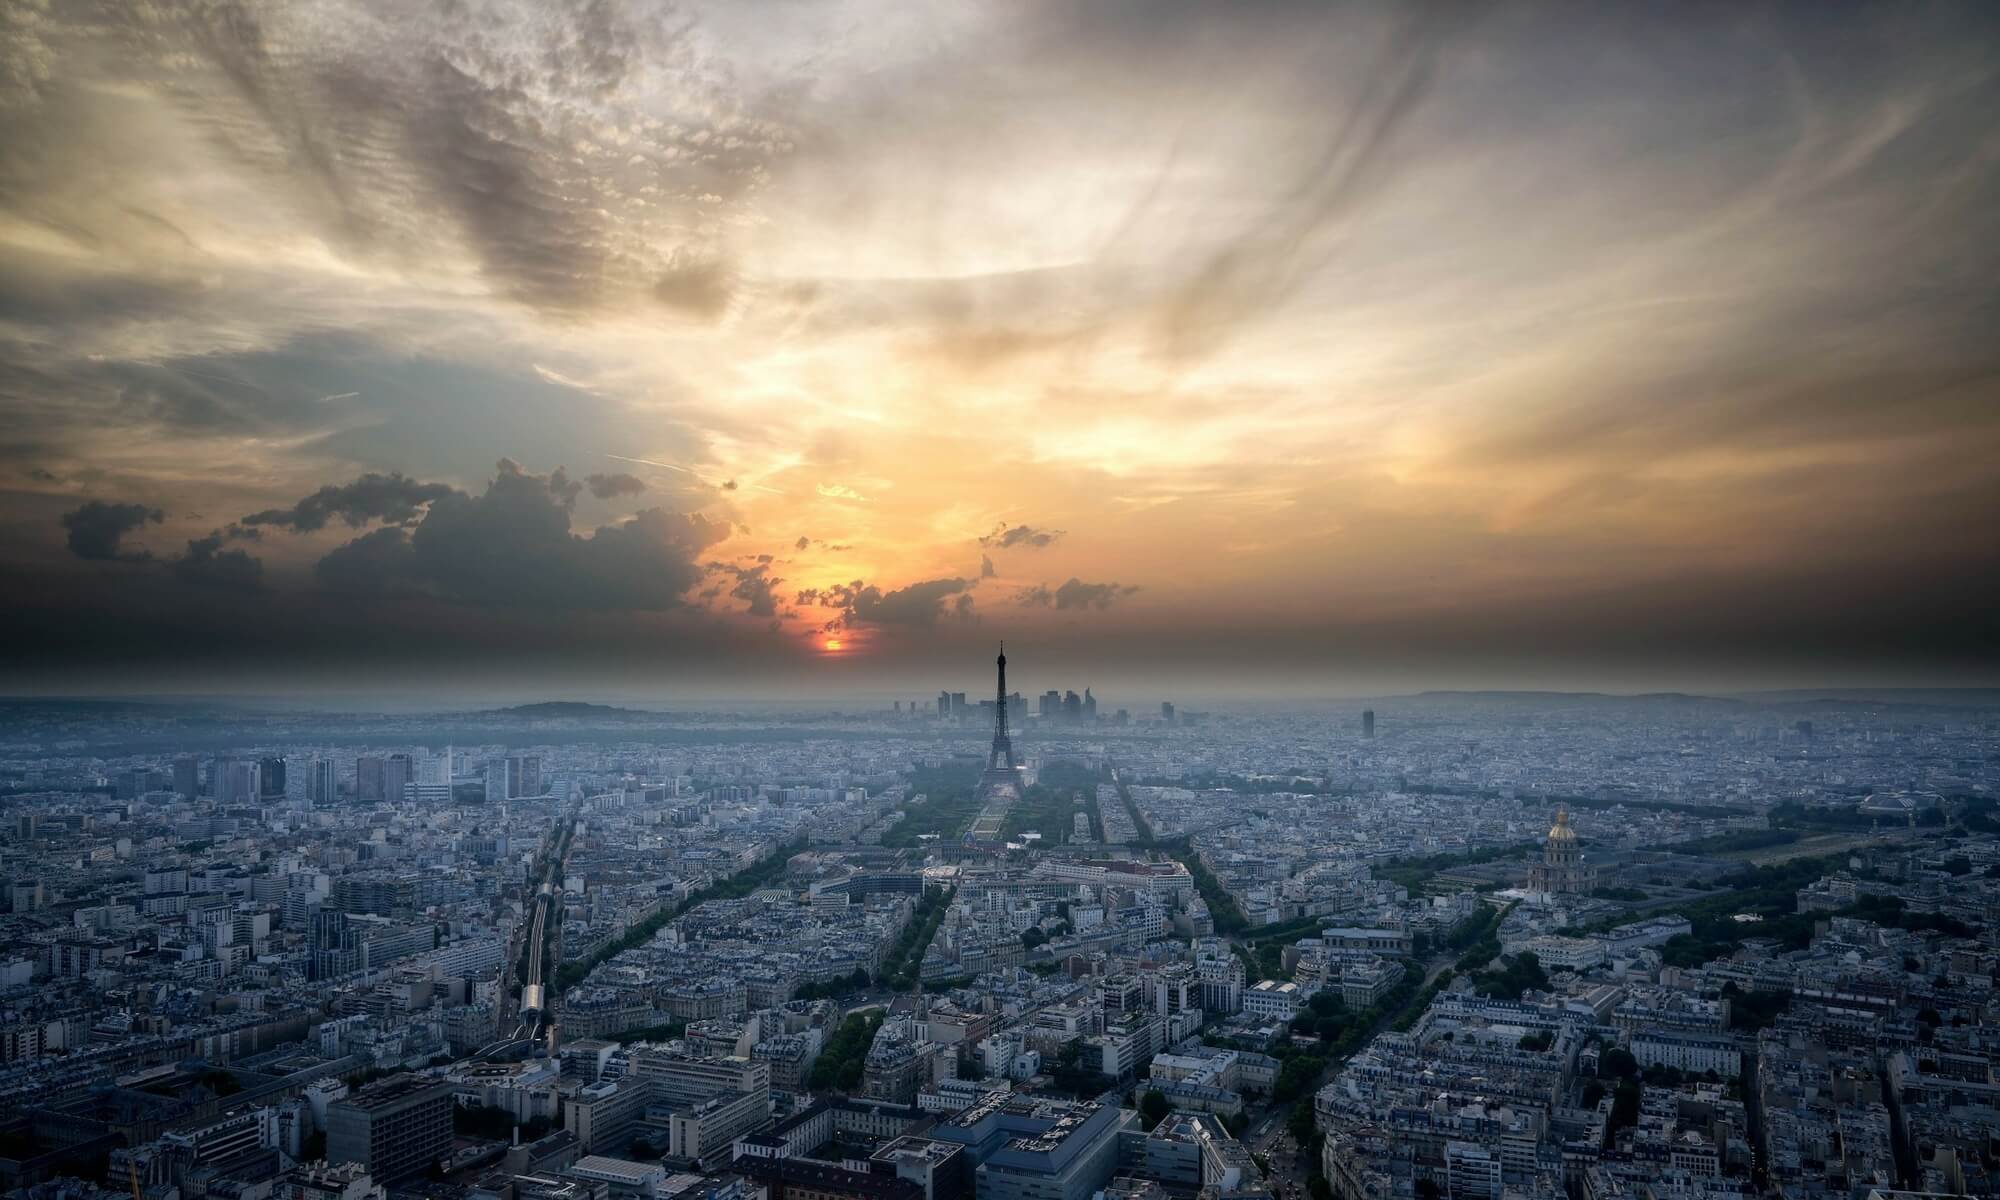 Paris skyline with eiffel tower and dramatic sky